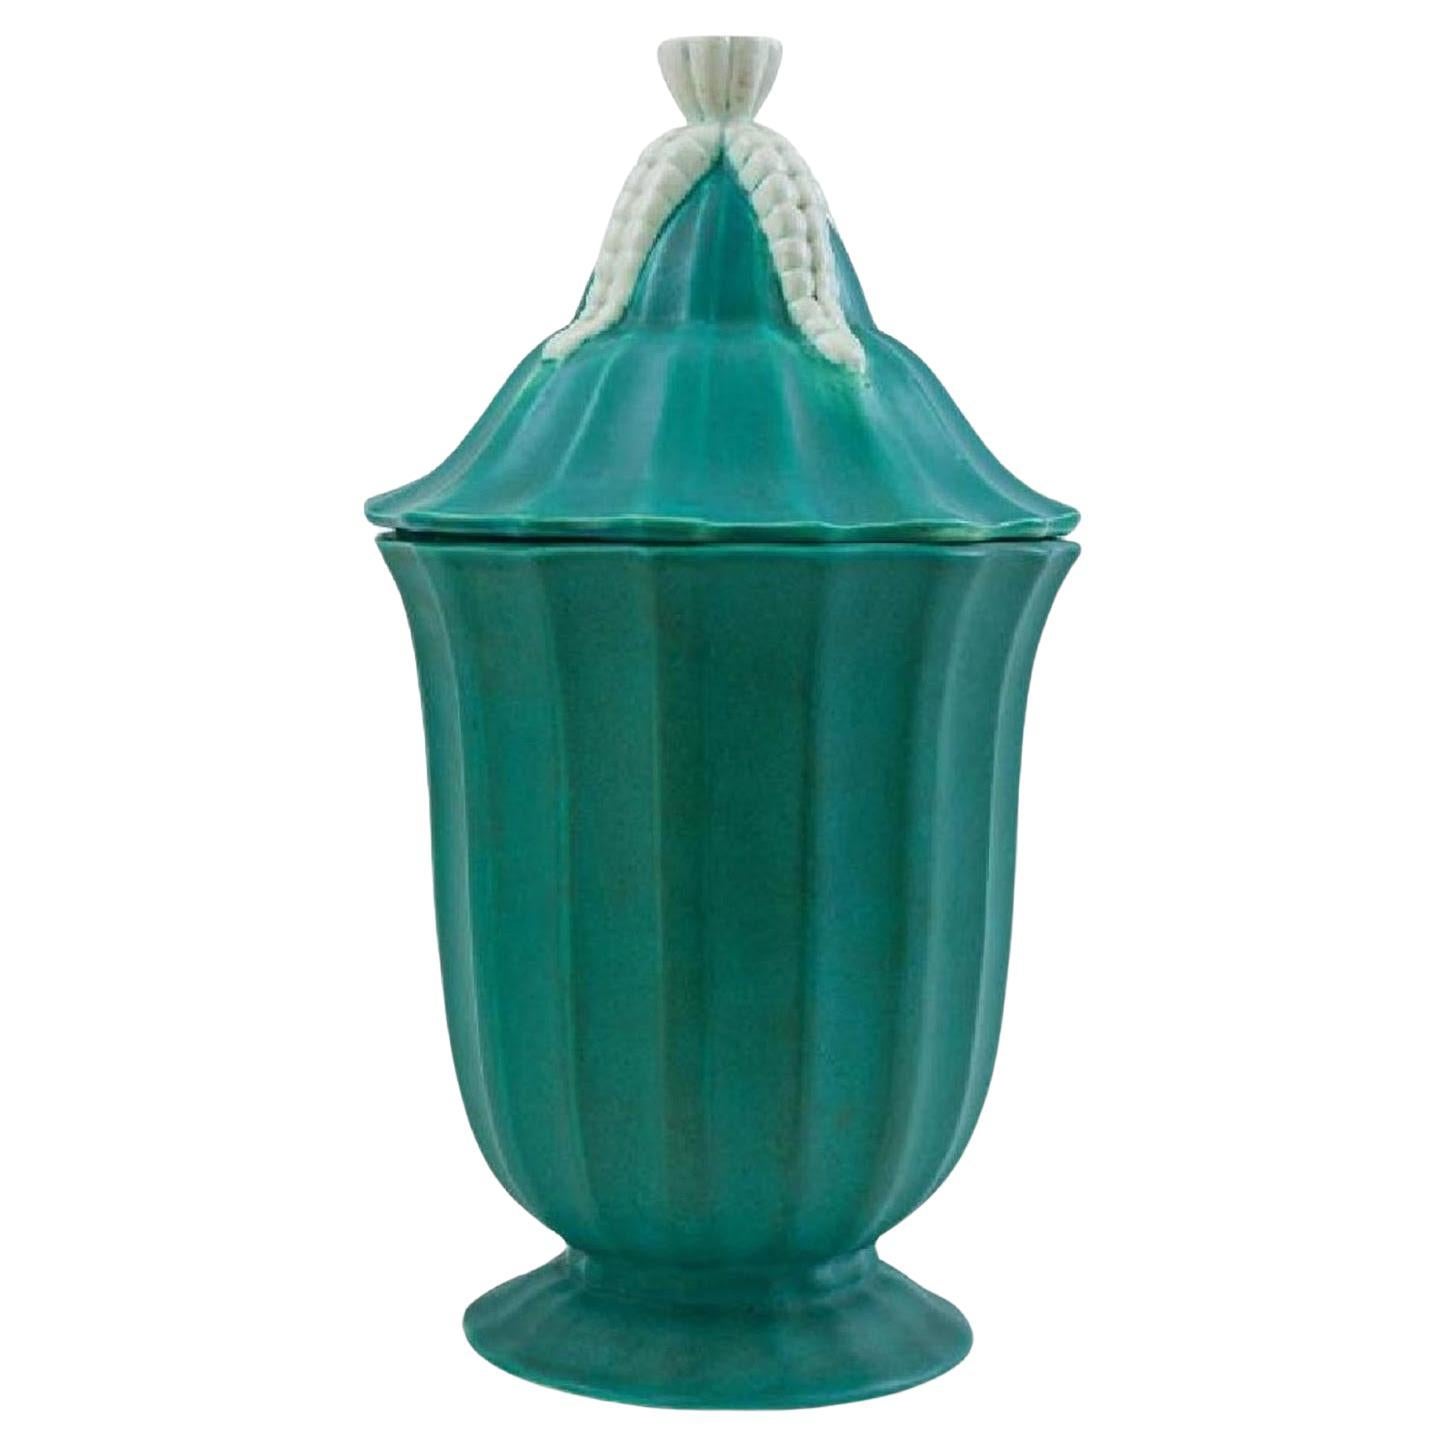 Lidded Vase by Gio Ponti for Richard Ginori, 1930s